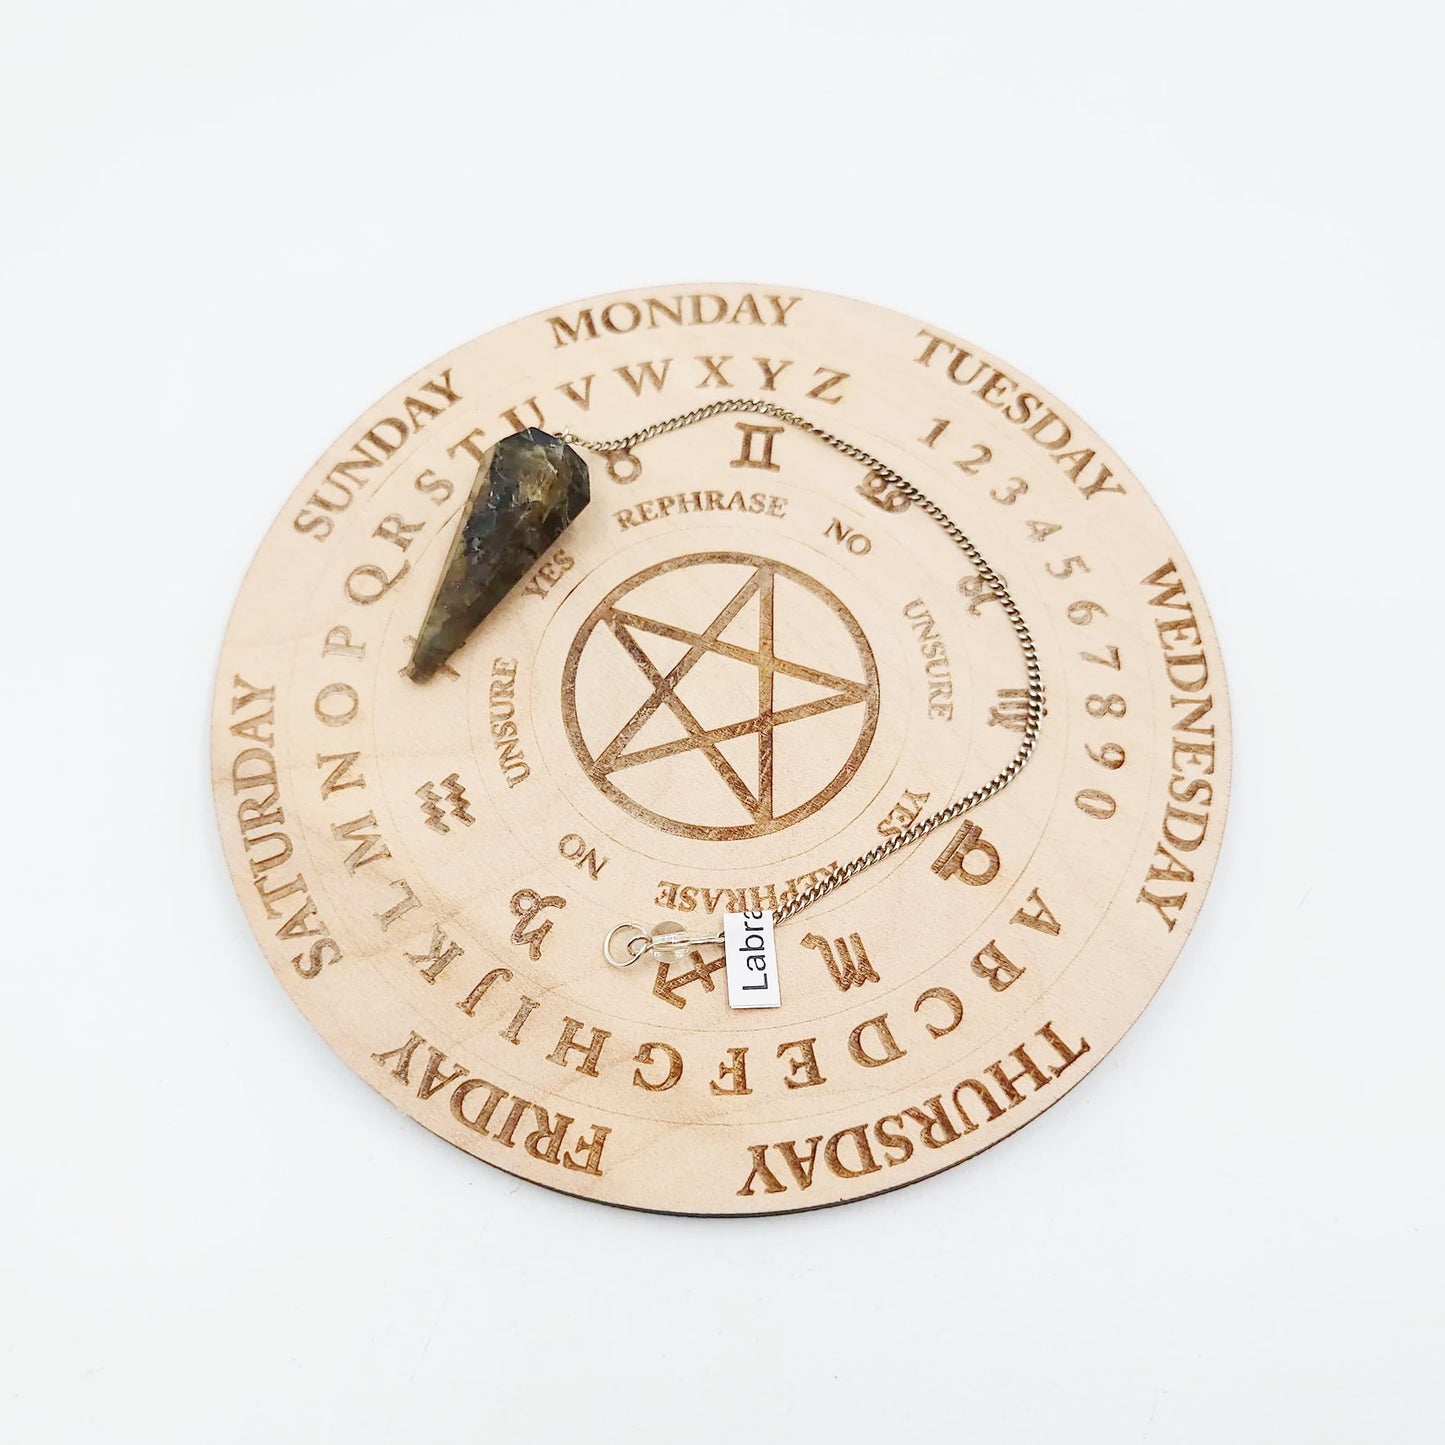 Labradorite Pendulum Faceted Polished - Elevated Metaphysical